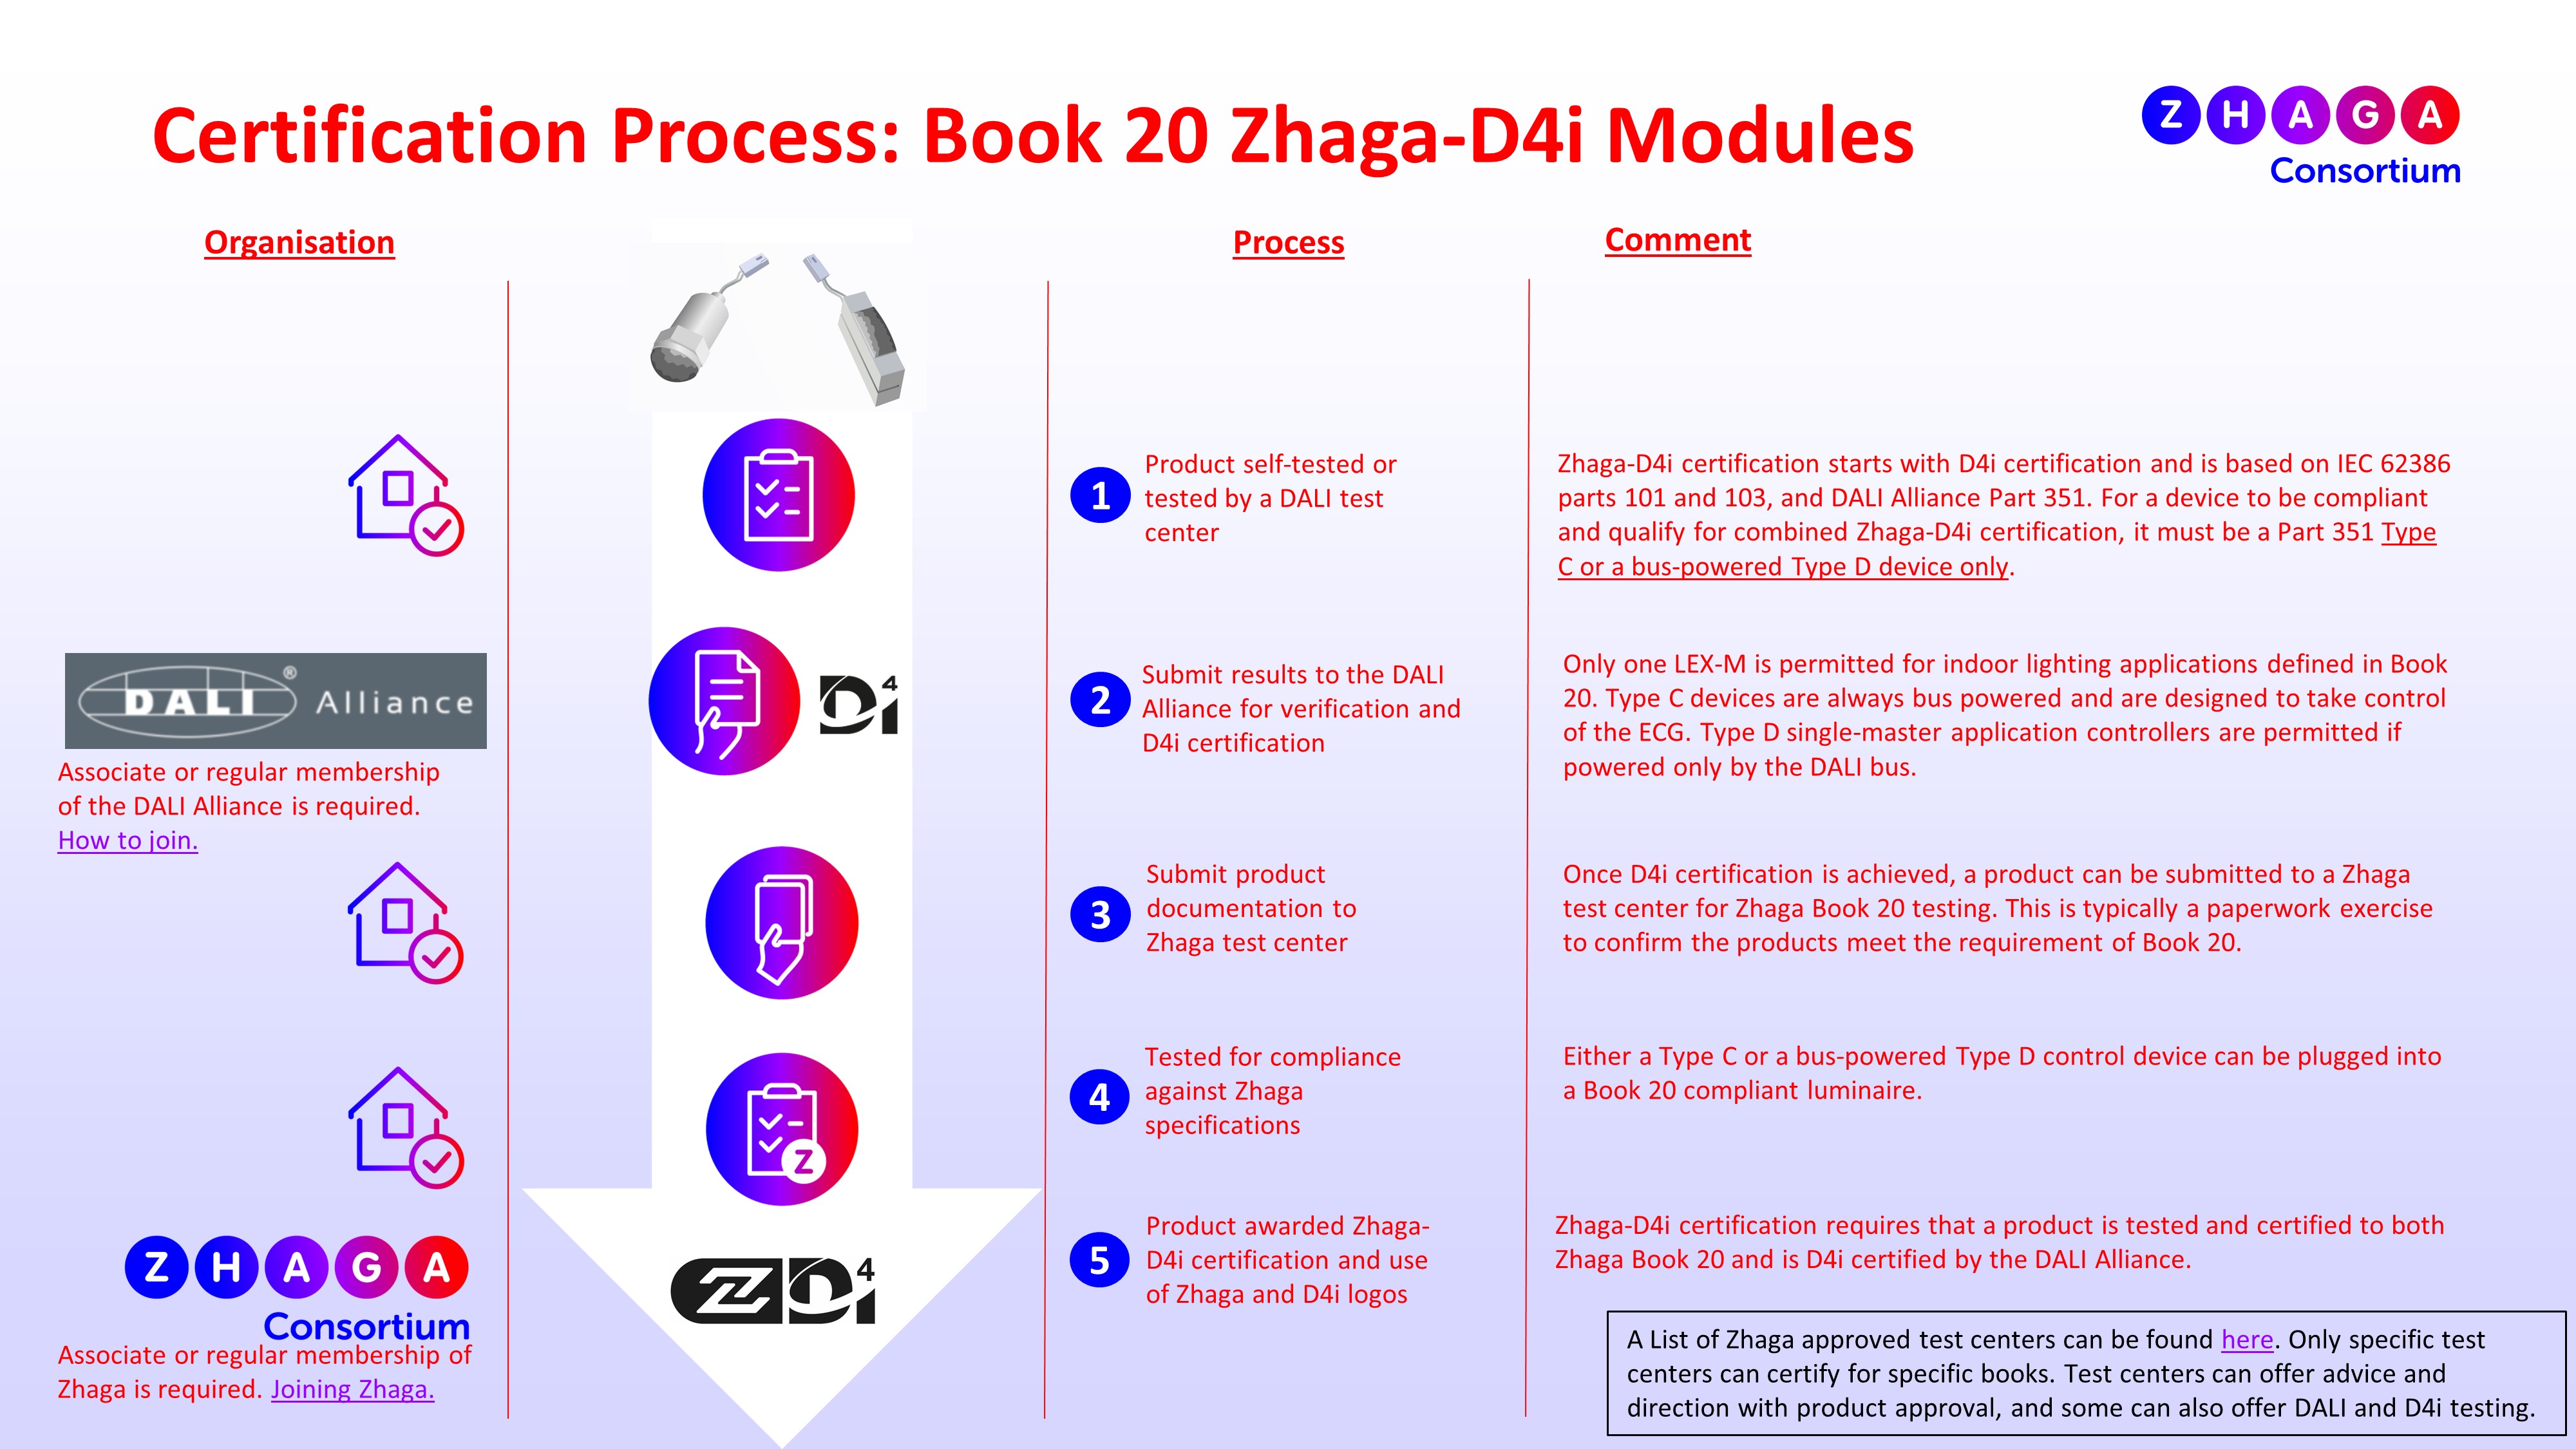 Book 20 Zhaga D4i certification process Modules January 2022